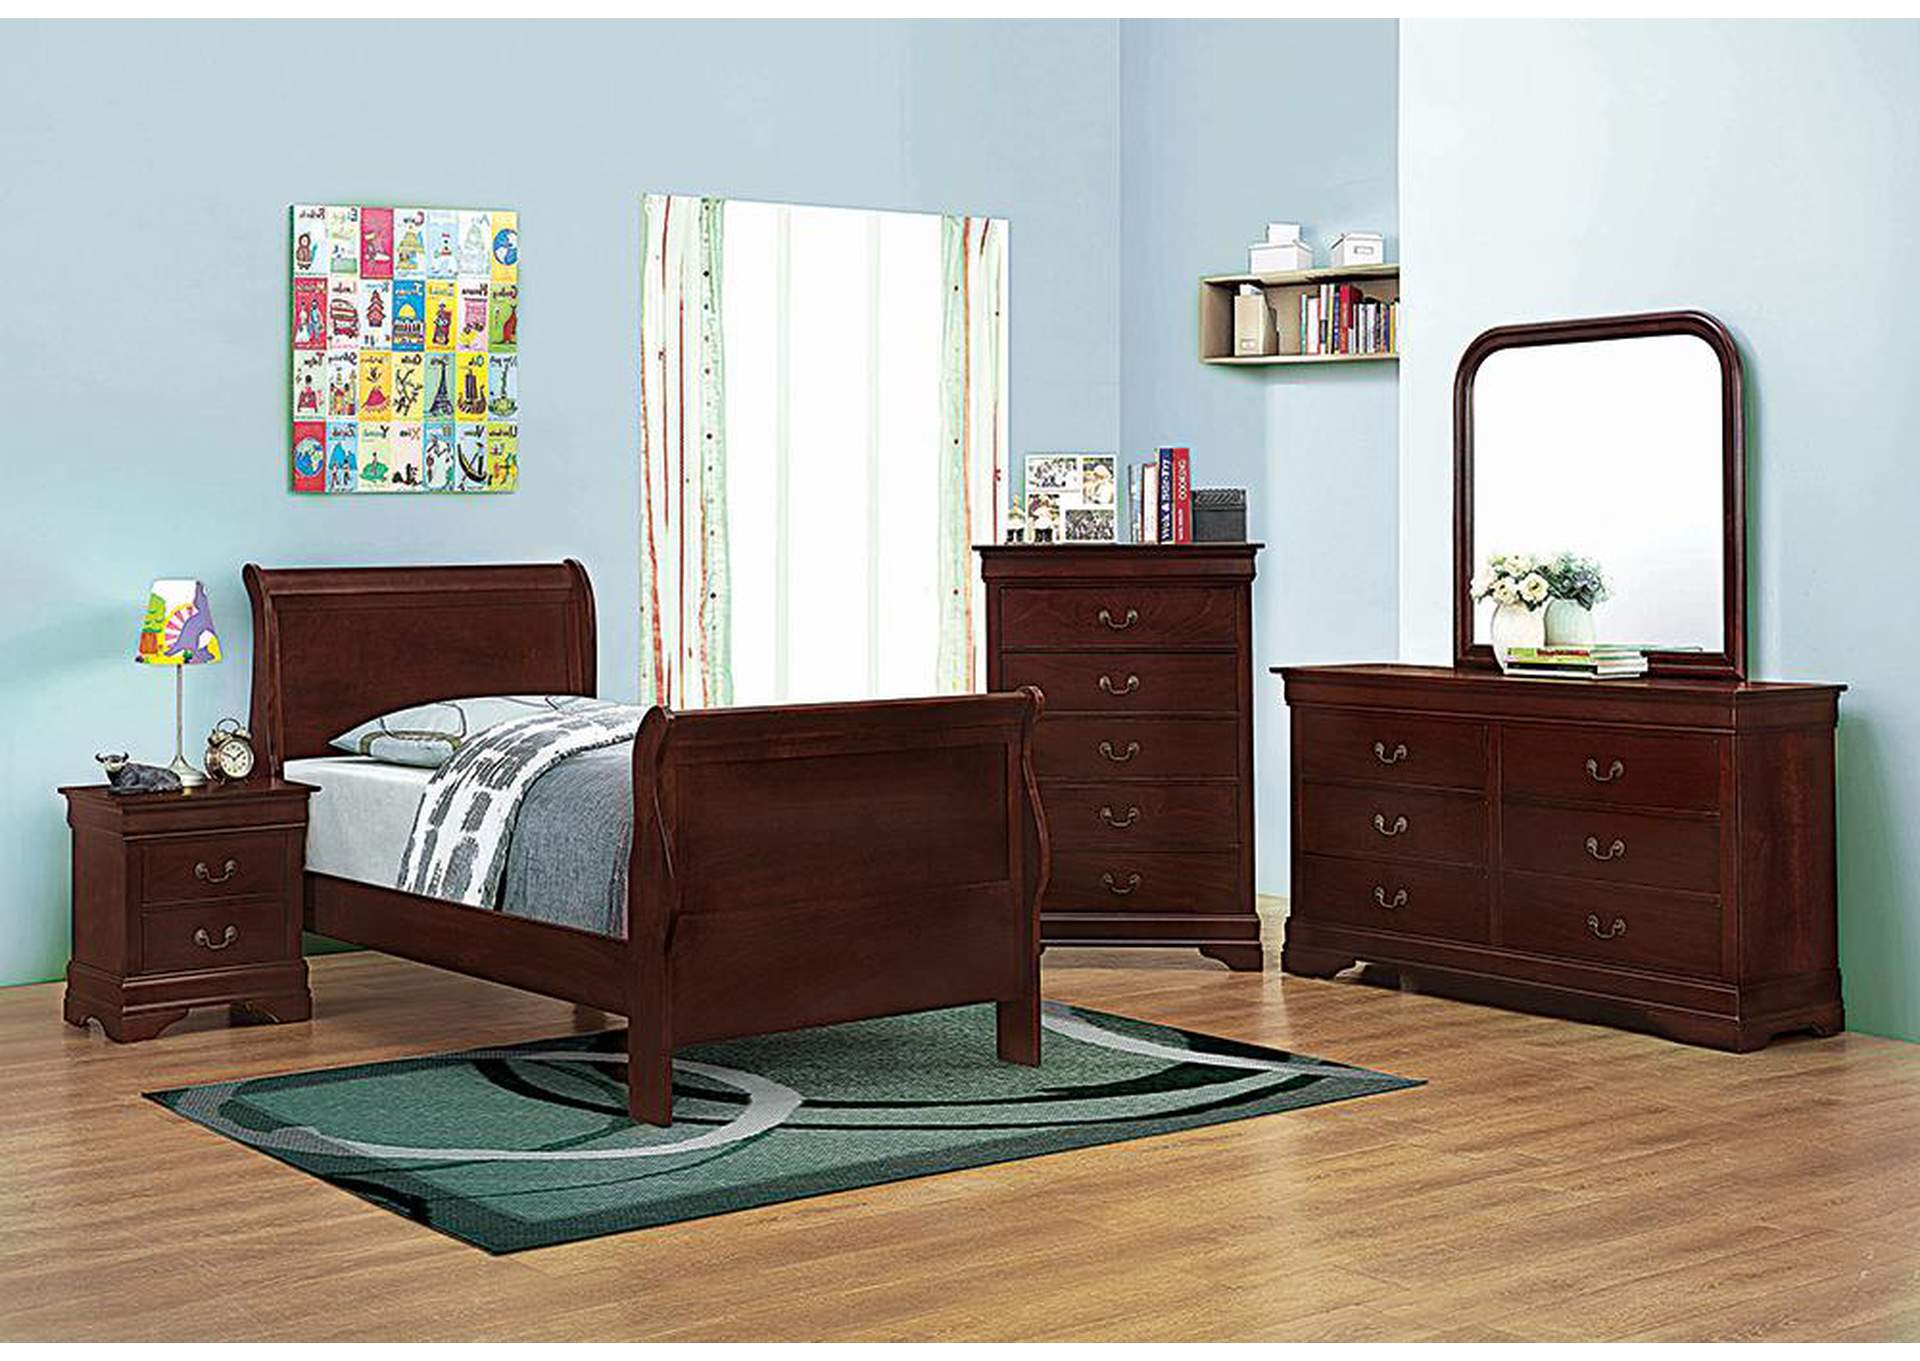 Cherry Twin Bed,ABF Coaster Furniture